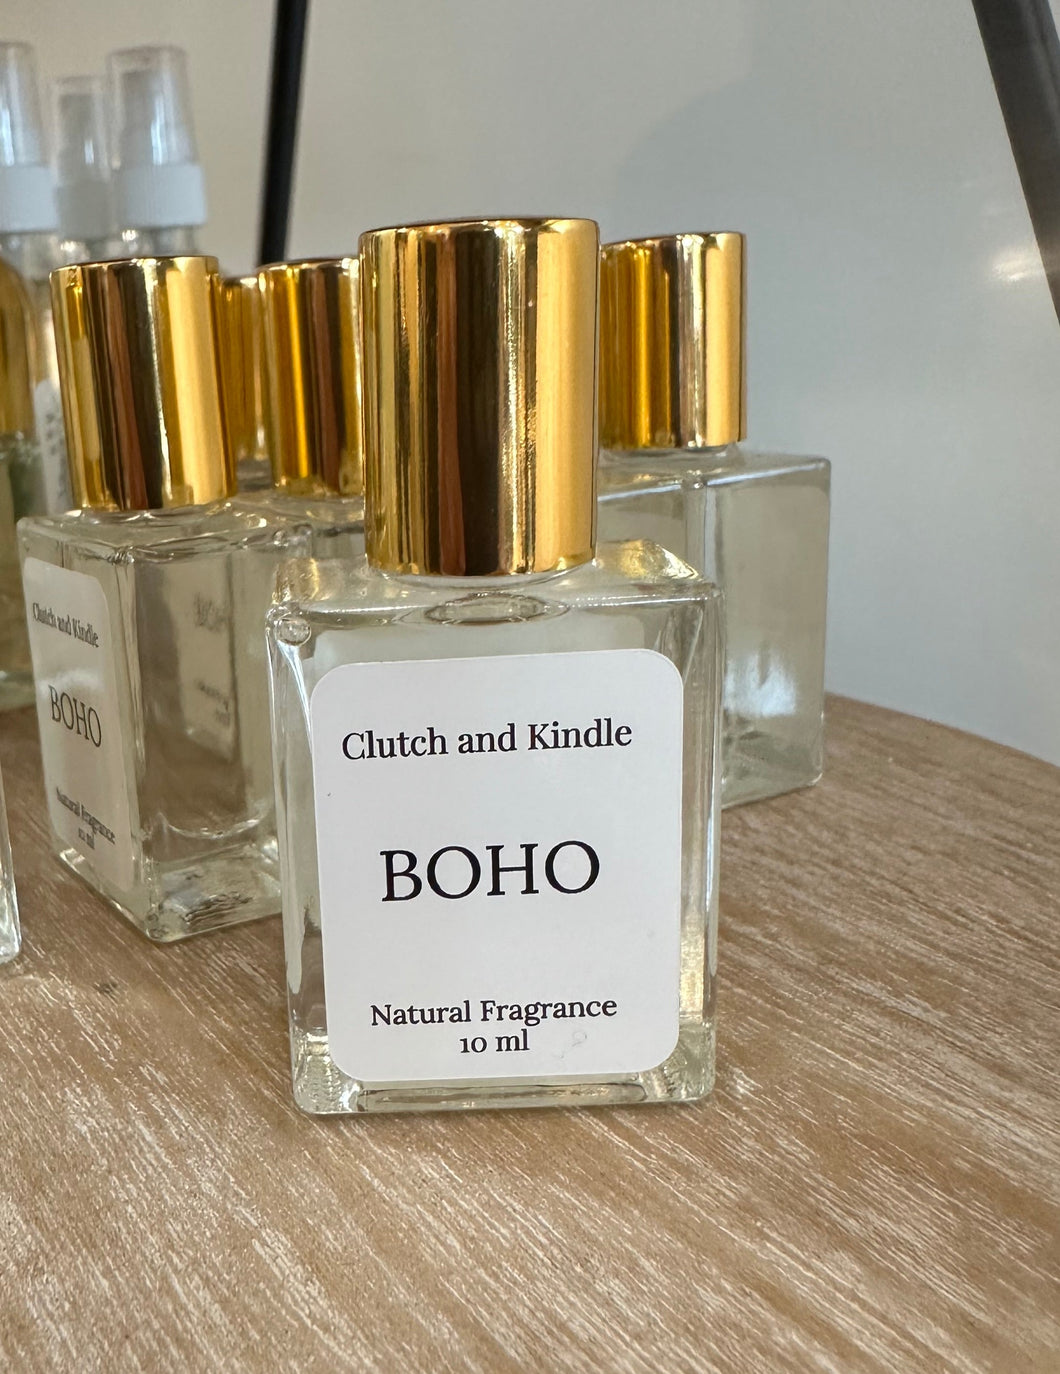 Roll on natural fragrance in Boho.  10ml. 